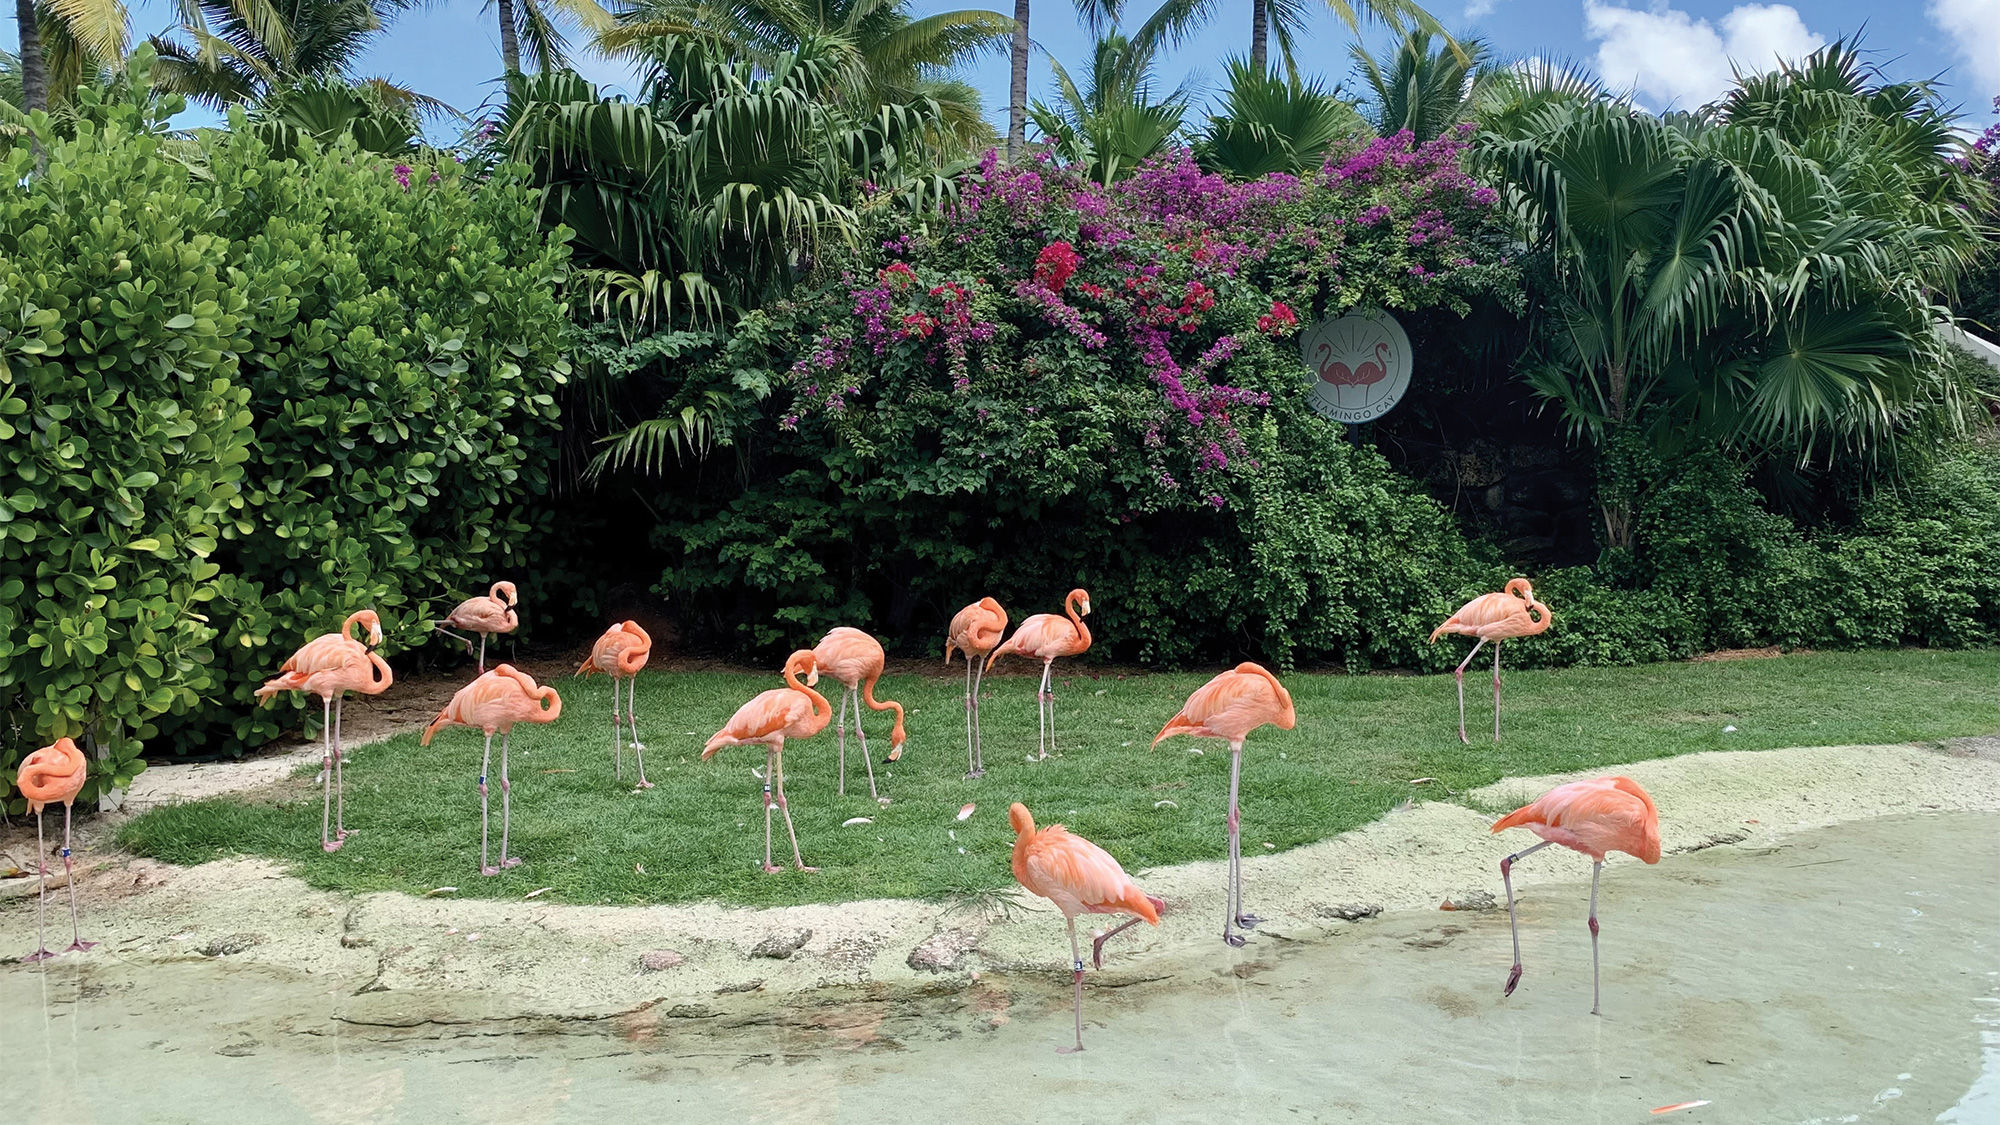 Baha Mar’s flock of flamingos at Flamingo Cay.